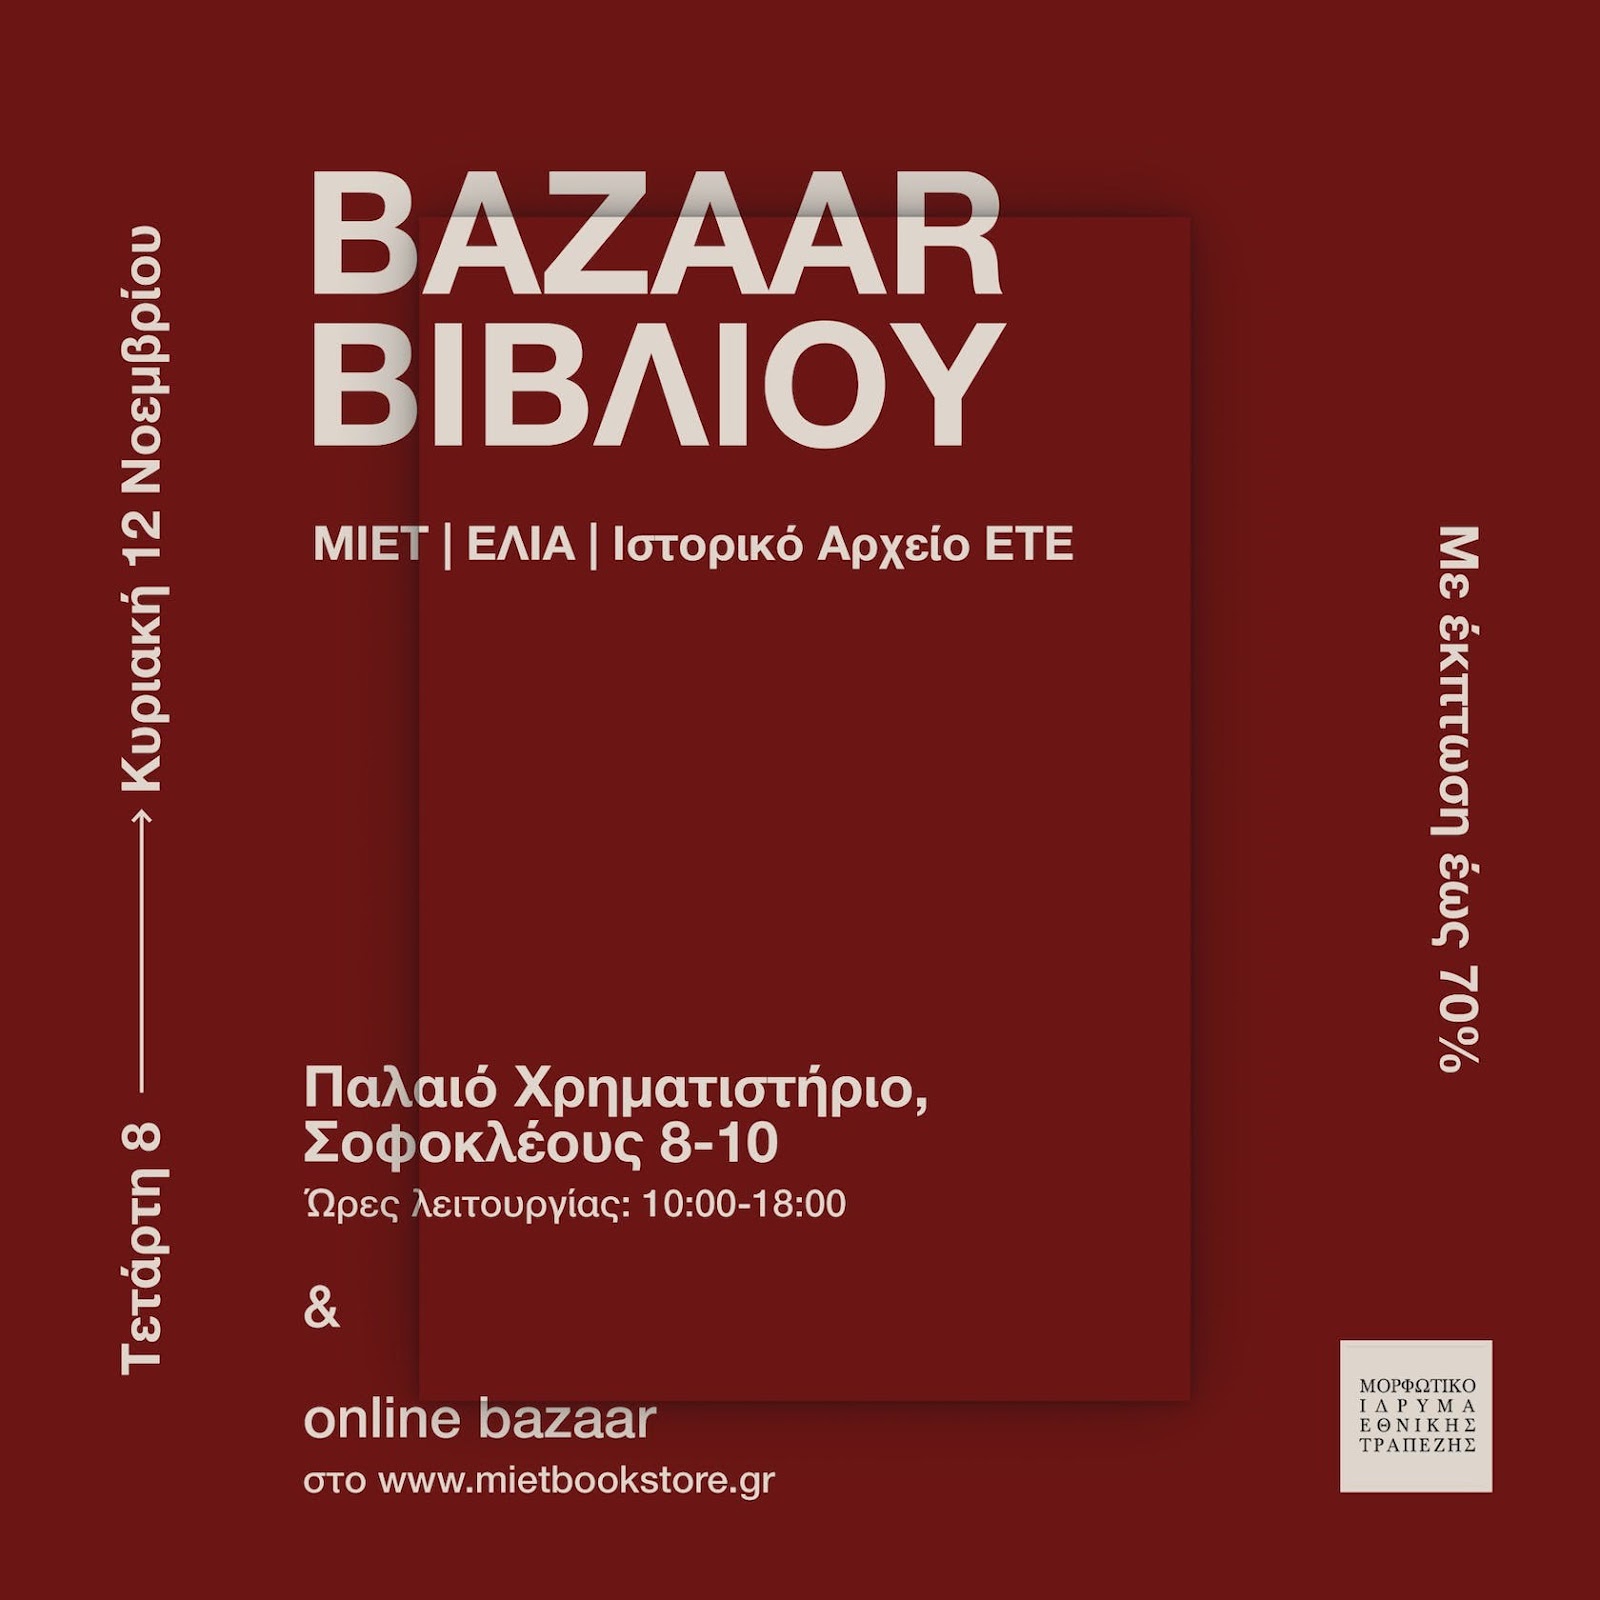 Bazaar Βιβλίου ΜΙΕΤ/ΕΛΙΑ/Ιστορικό Αρχείο ΕΤΕ